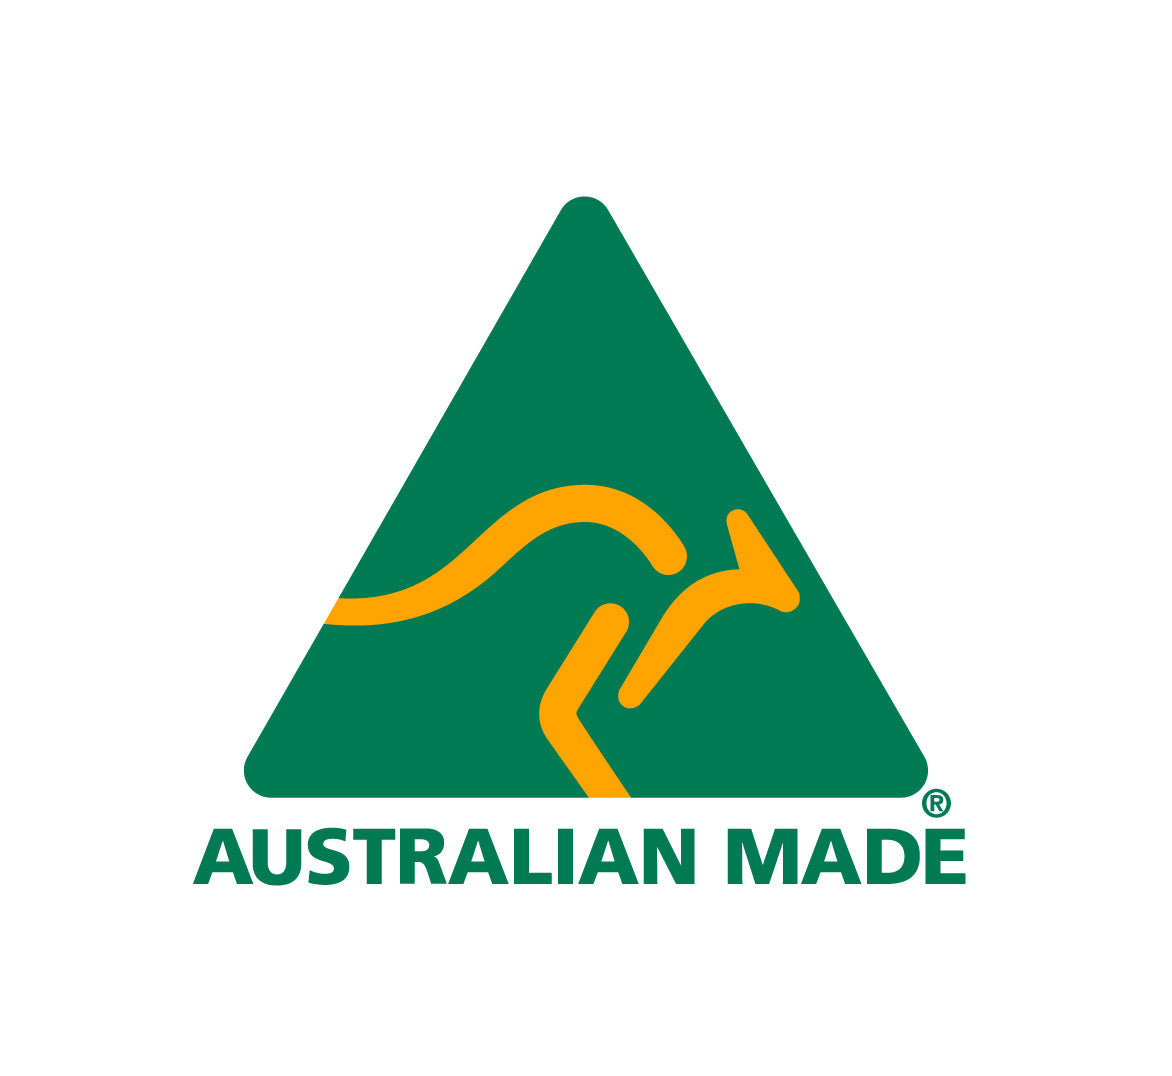 Official Australian made logo.